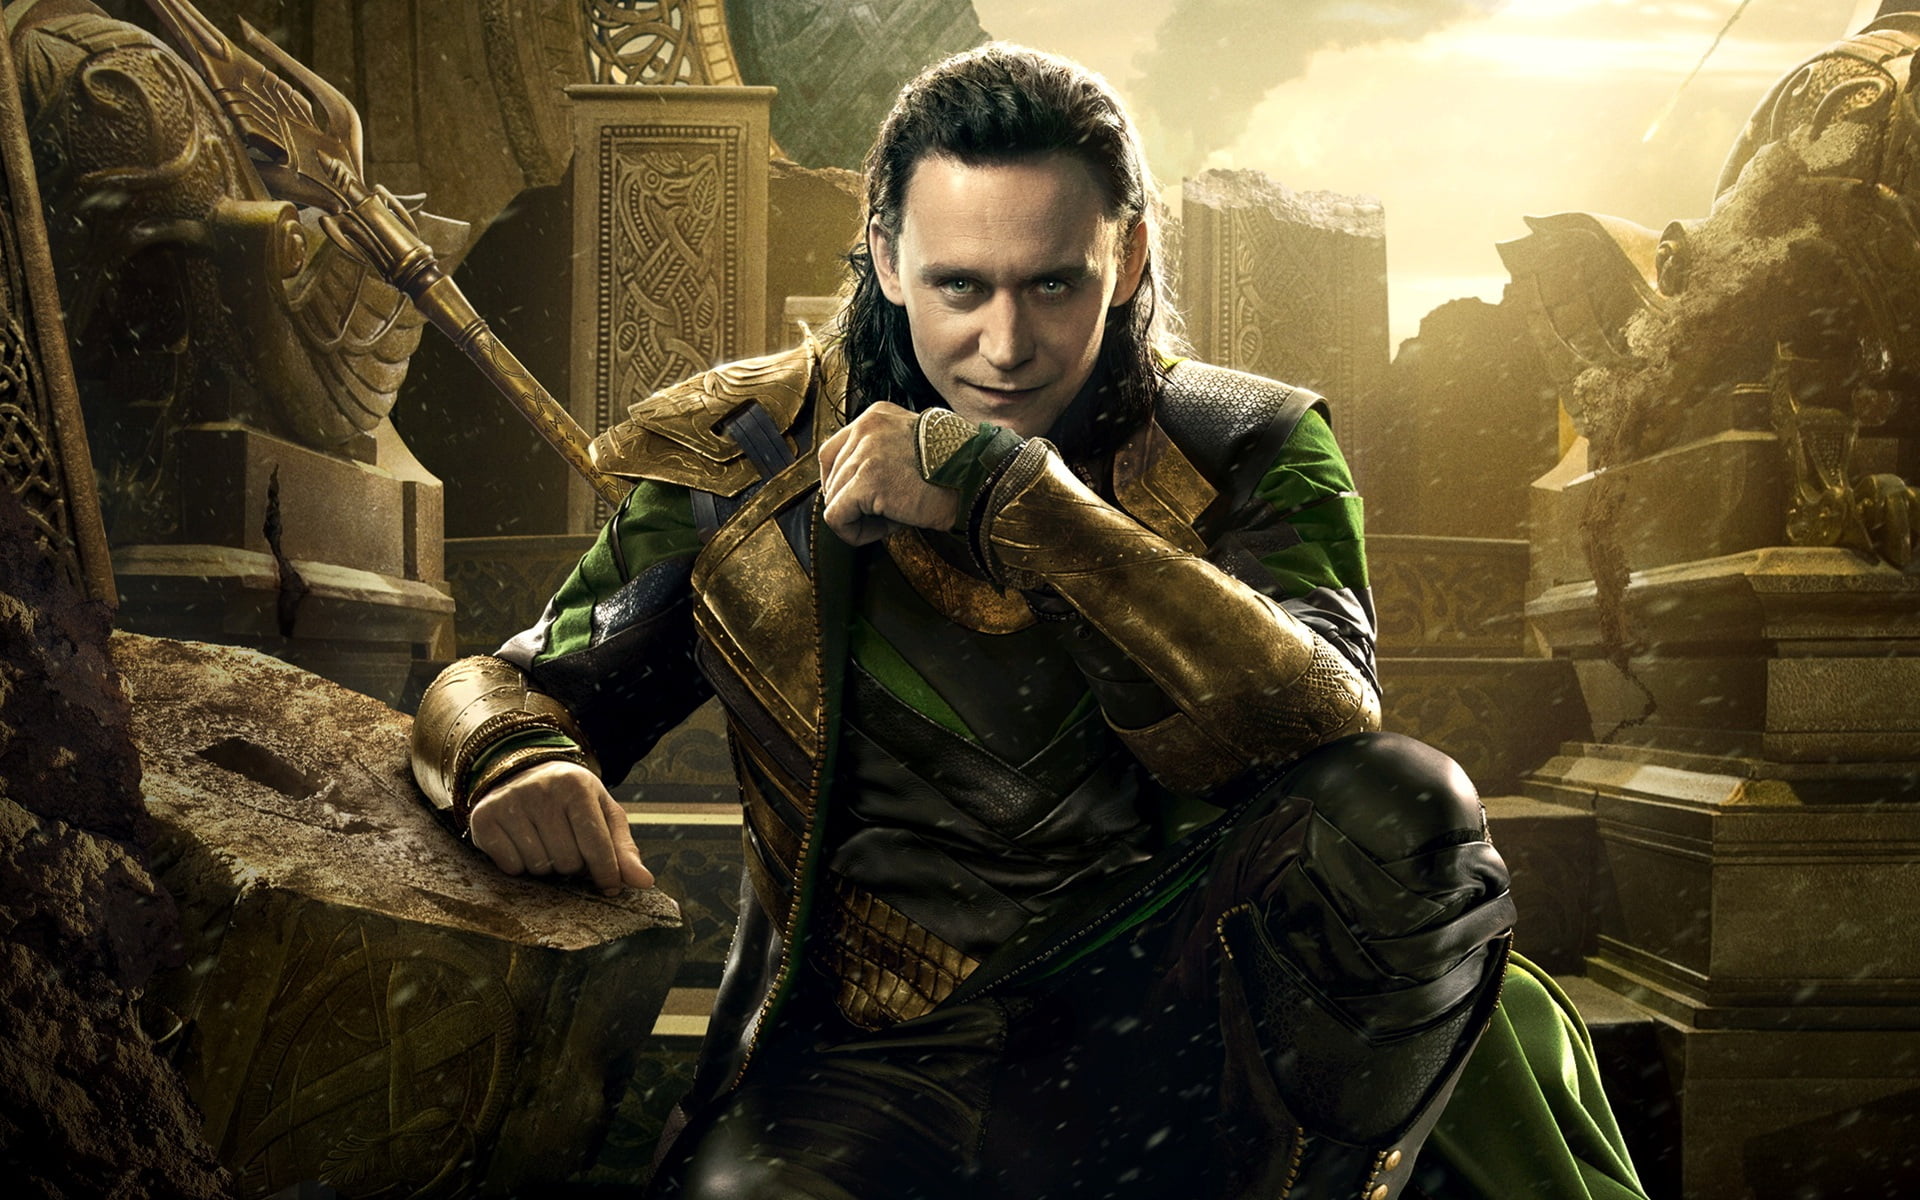 Loki Face The Dark World 2013, Loki, Movies, Hollywood Movies